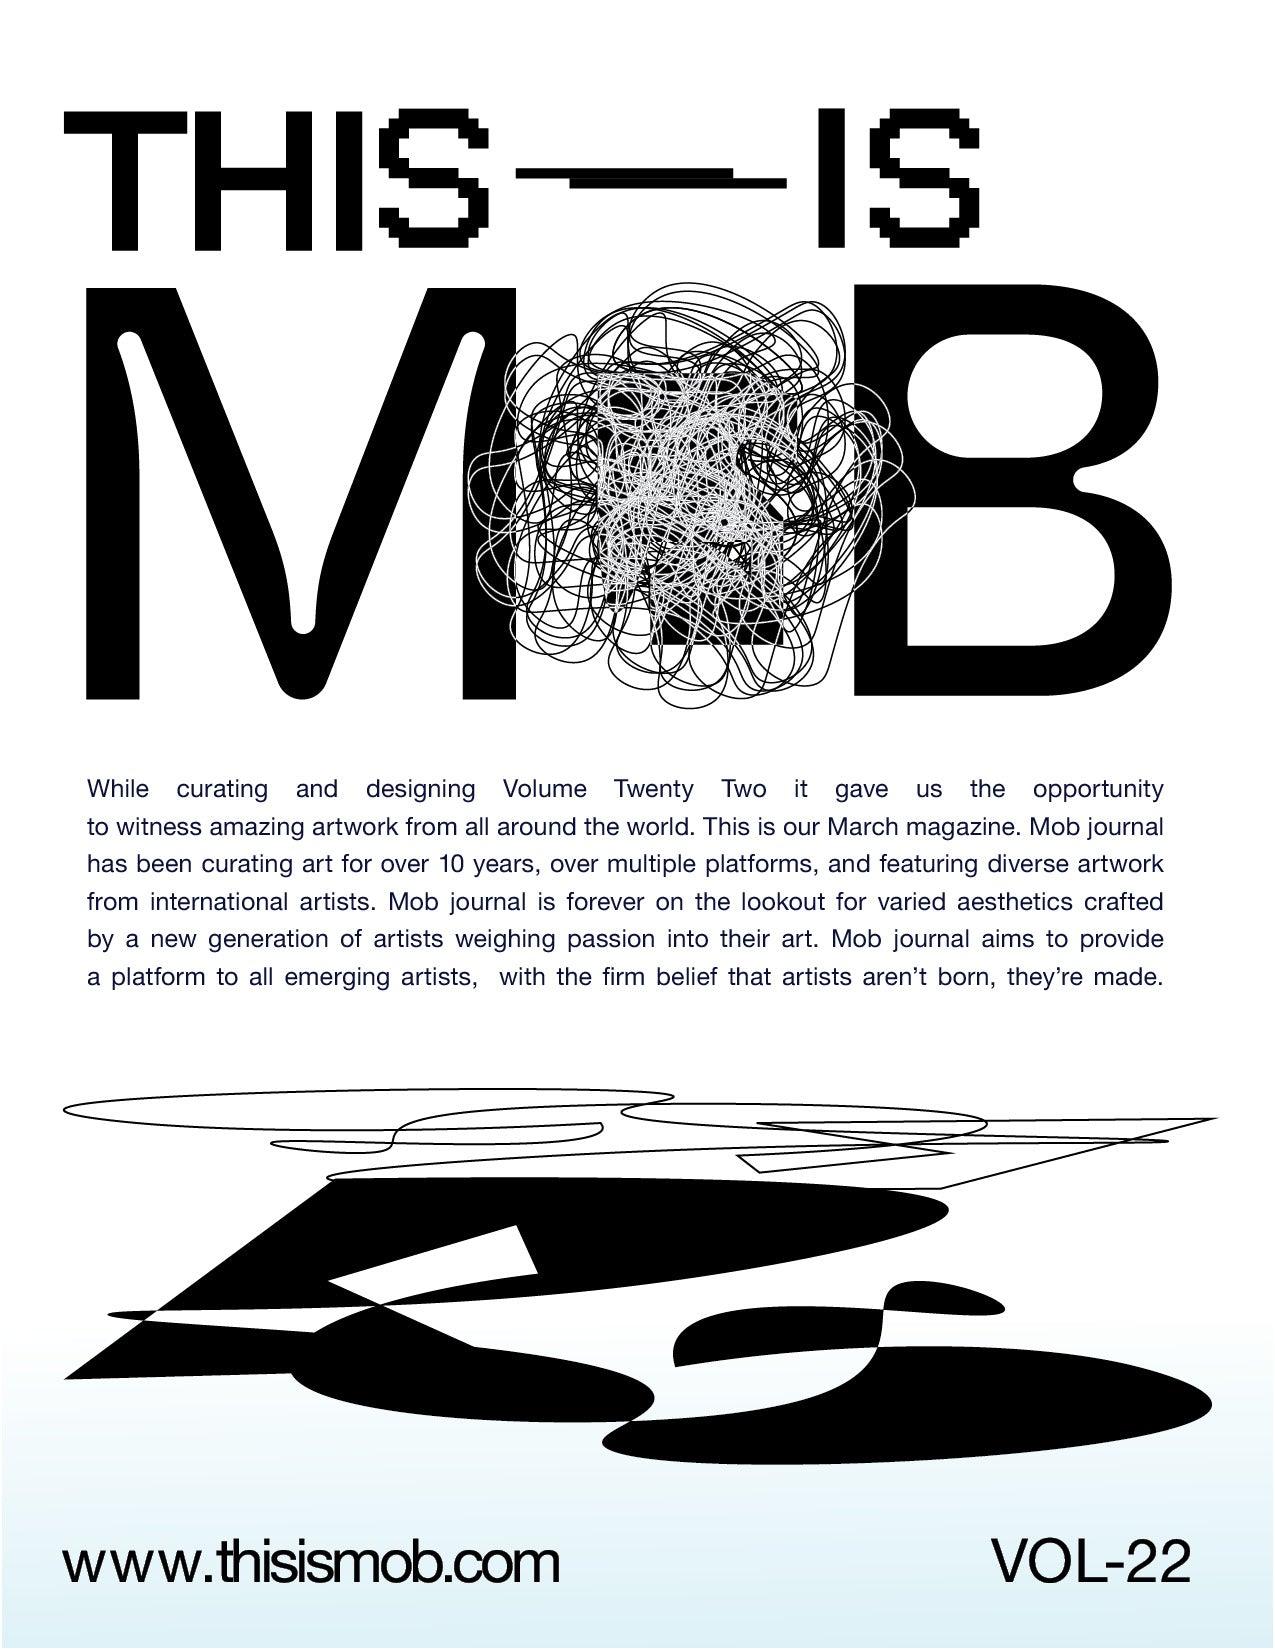 MOB JOURNAL | VOLUME TWENTY TWO | ISSUE #28 - Mob Journal